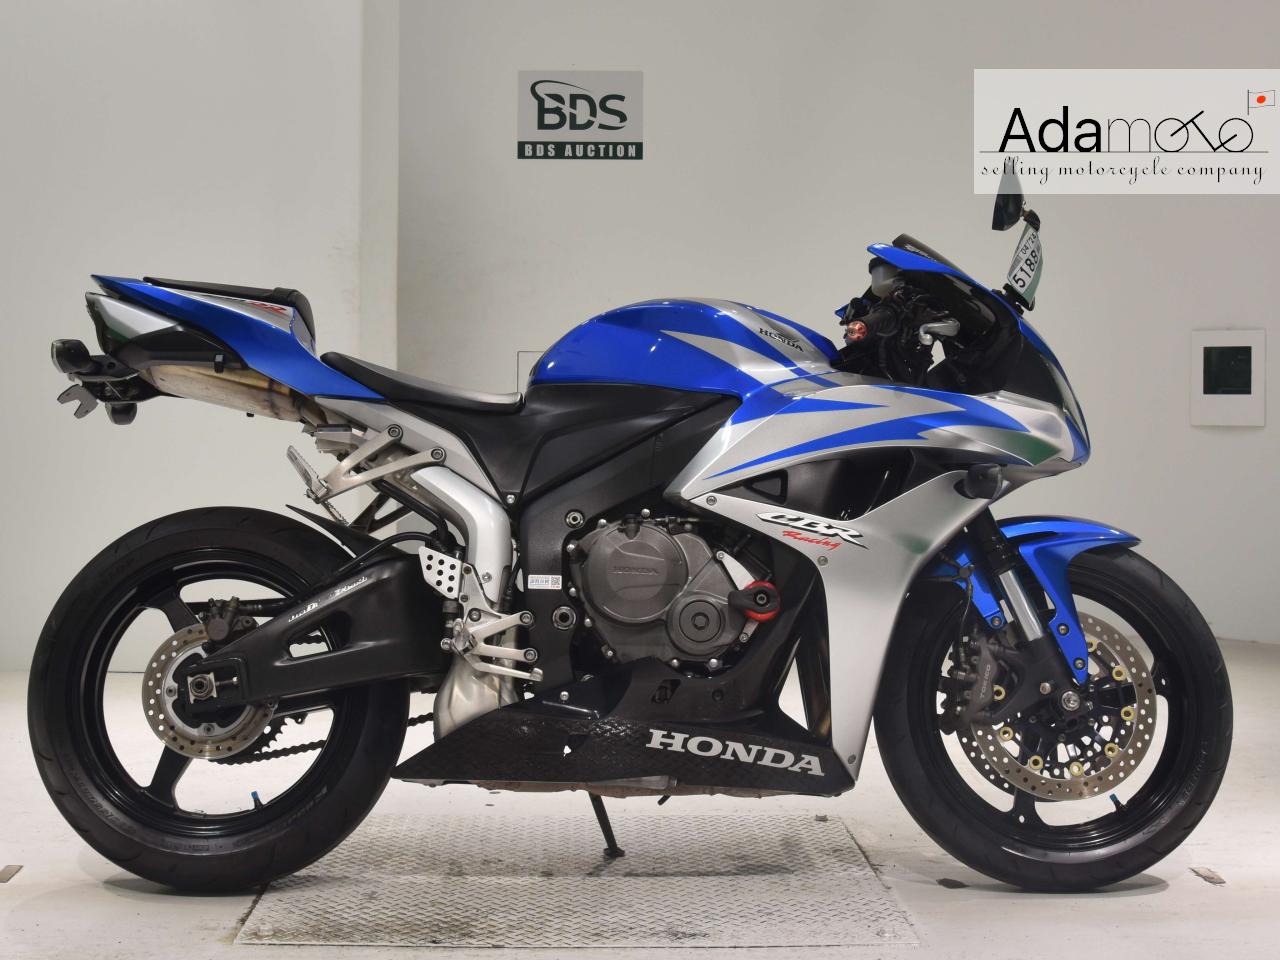 Мотоцикл Honda CBR600RR ABS (10994км), код товара 180131-5899